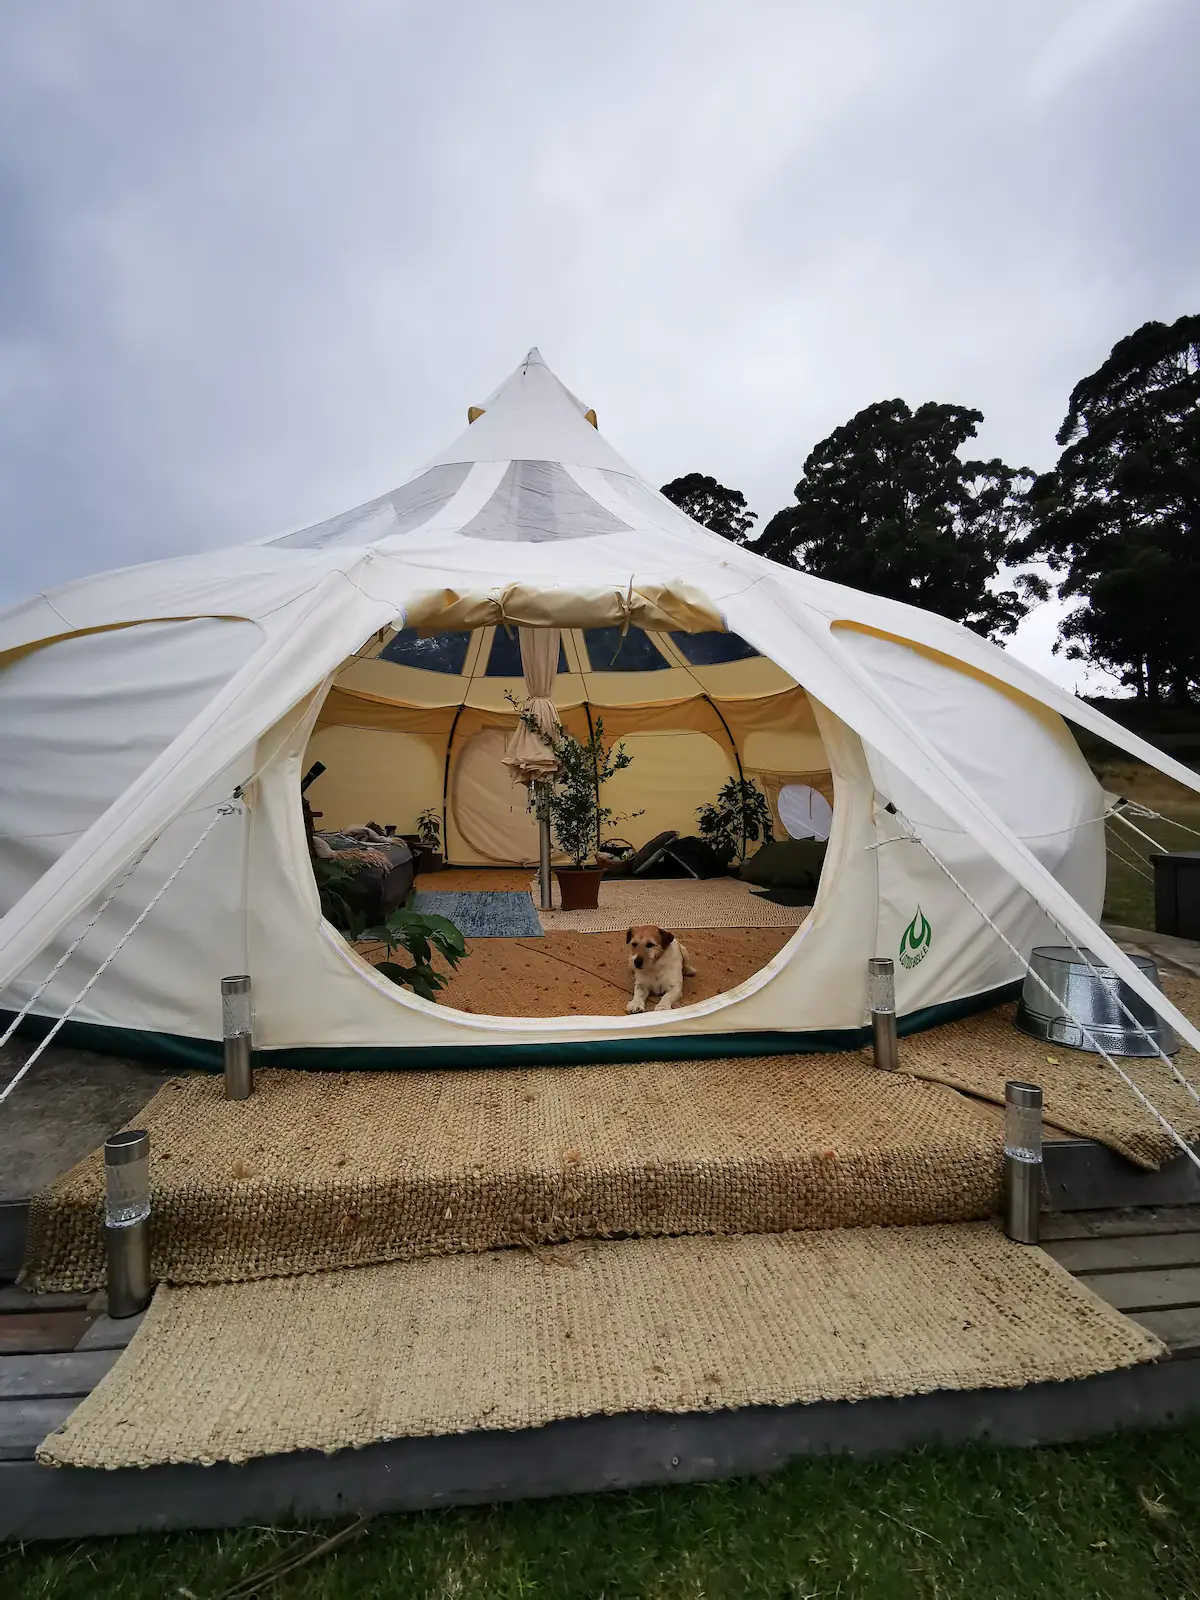 The Top Paddock - Glamping yurt in Australia